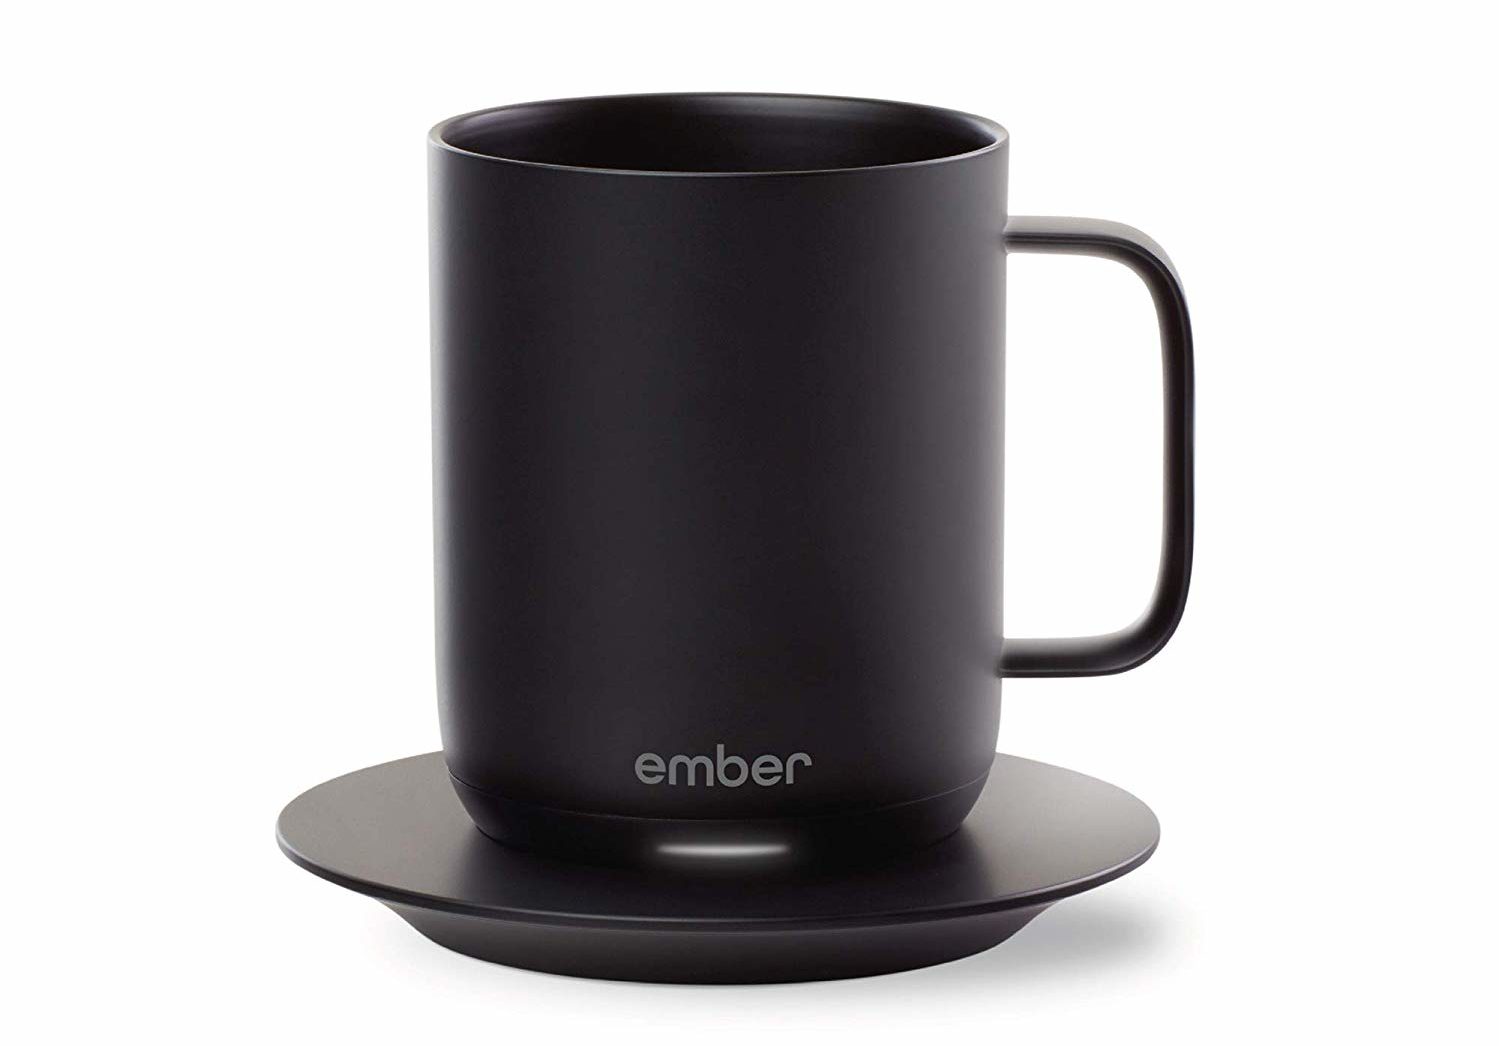 Ember Temp Controlled Smart Coffee Mug 2022 for Him